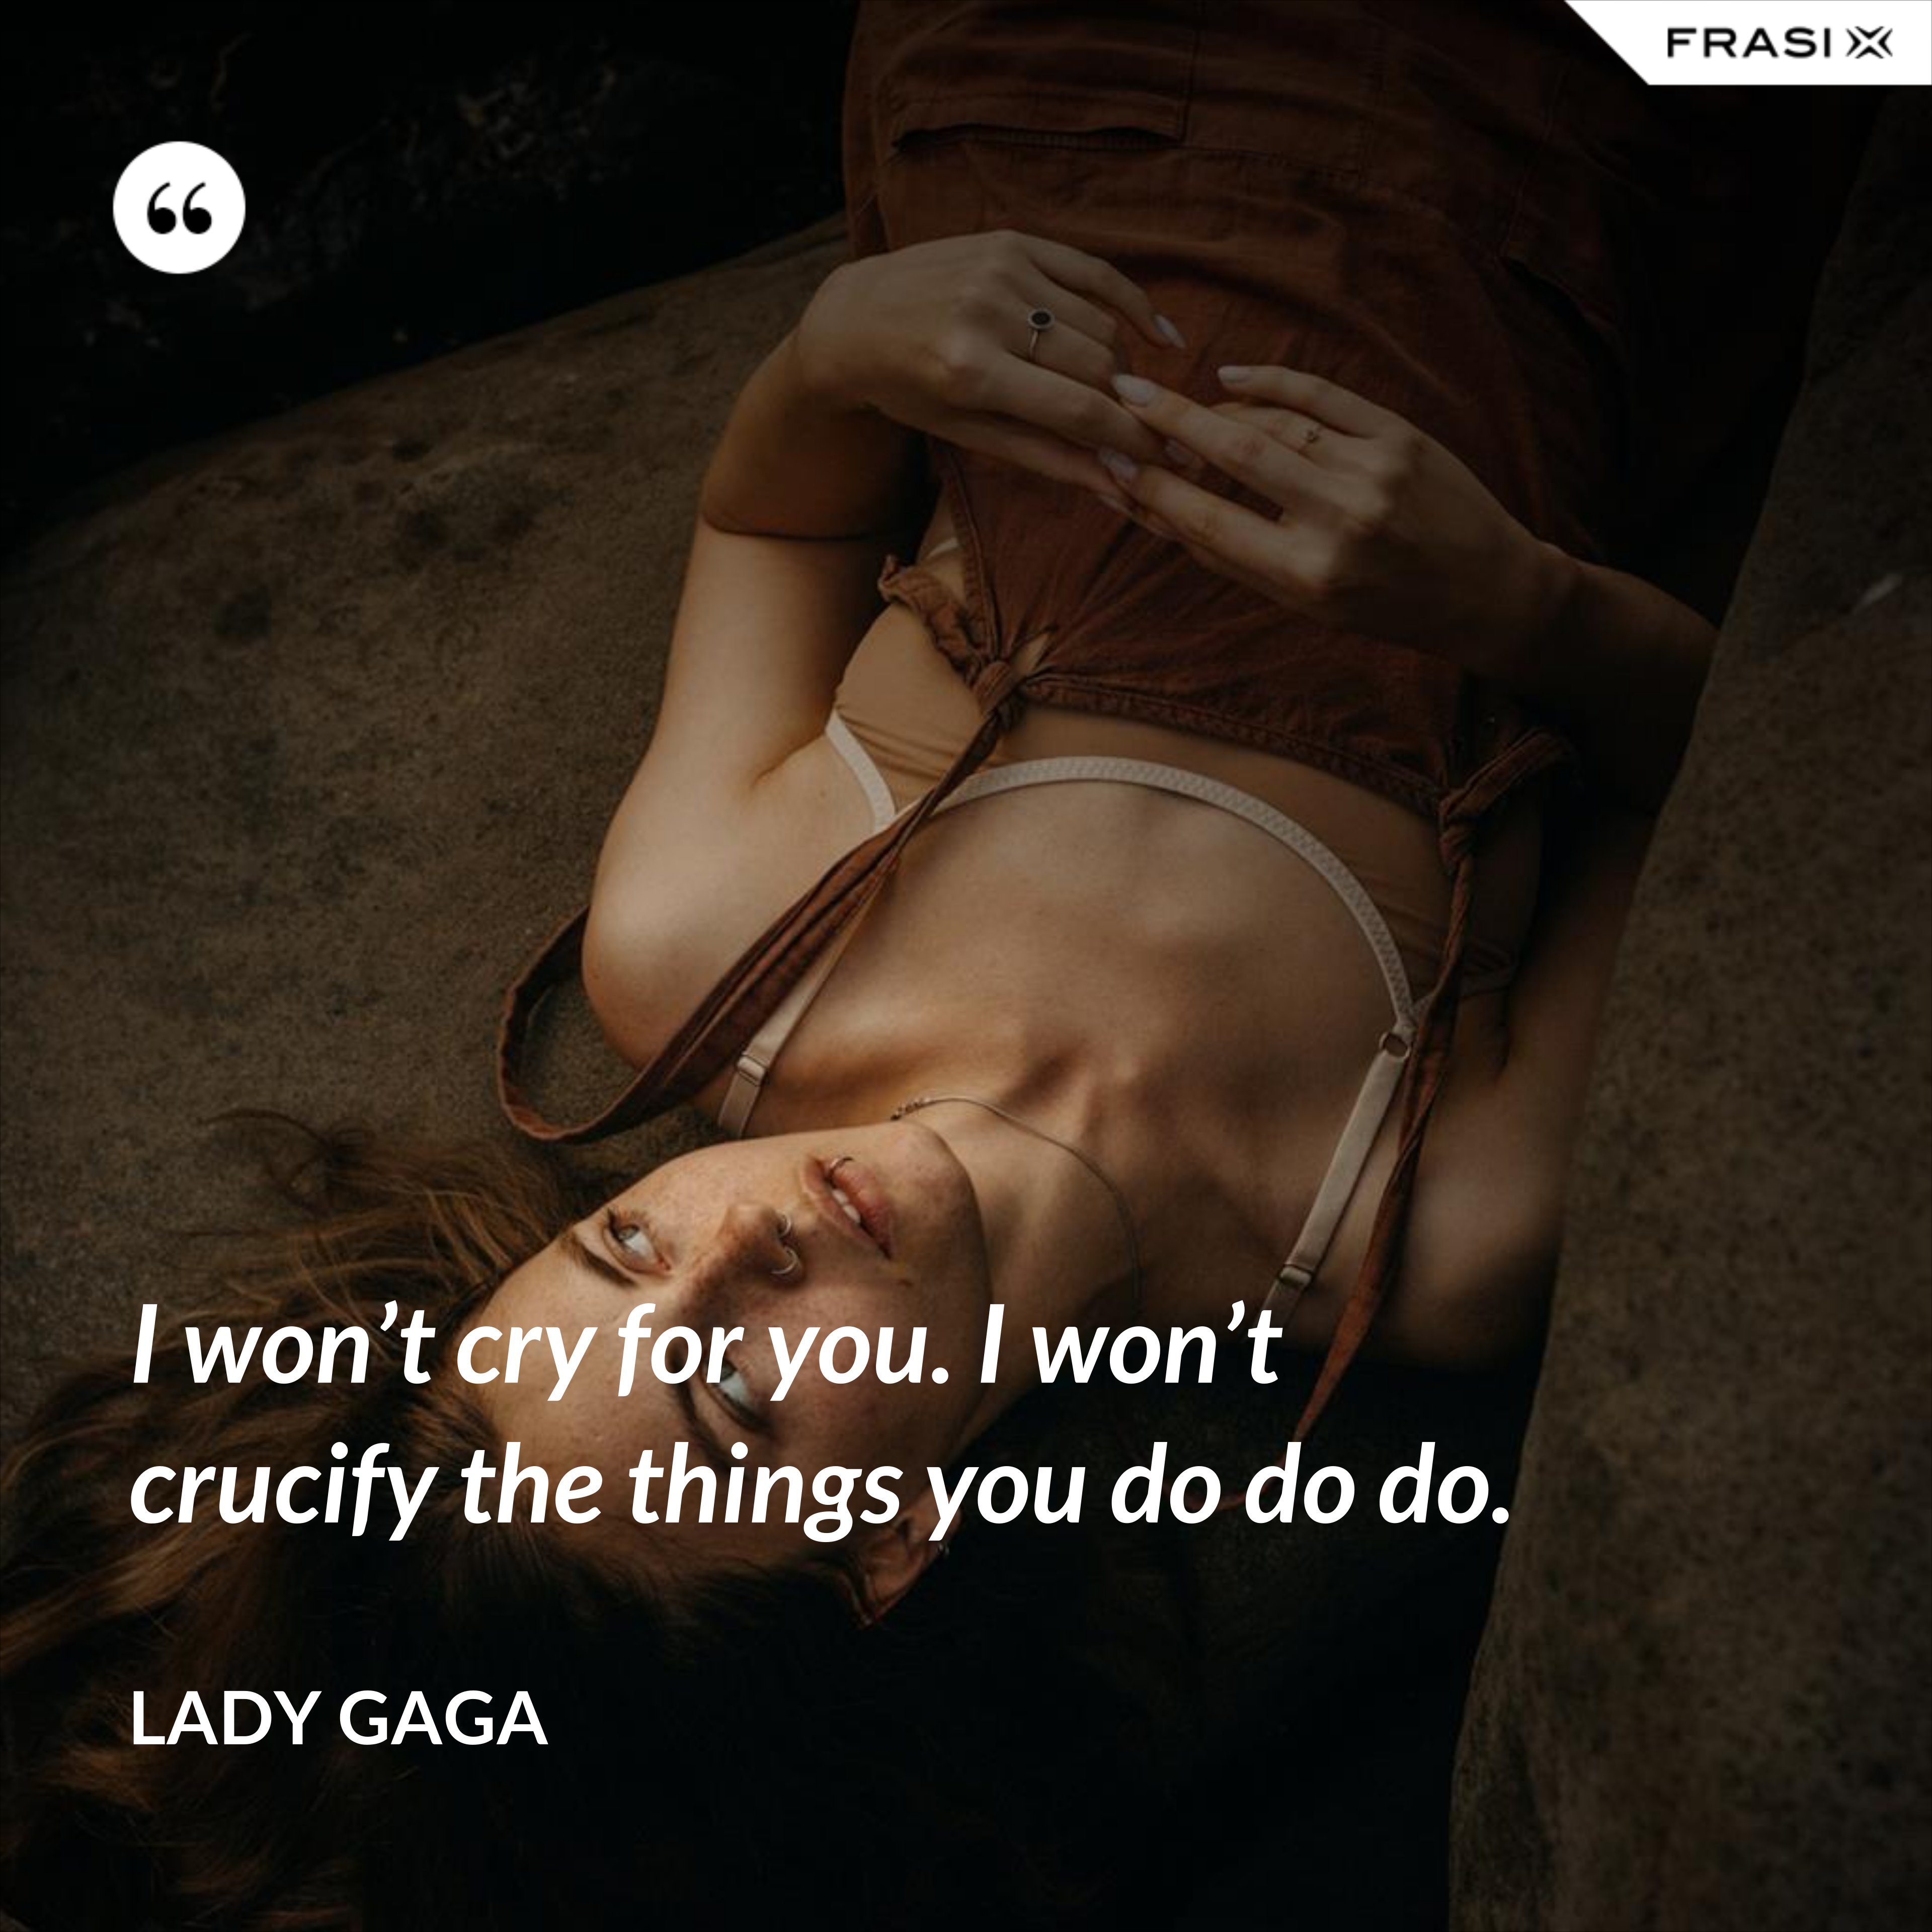 I won’t cry for you. I won’t crucify the things you do do do. - Lady Gaga